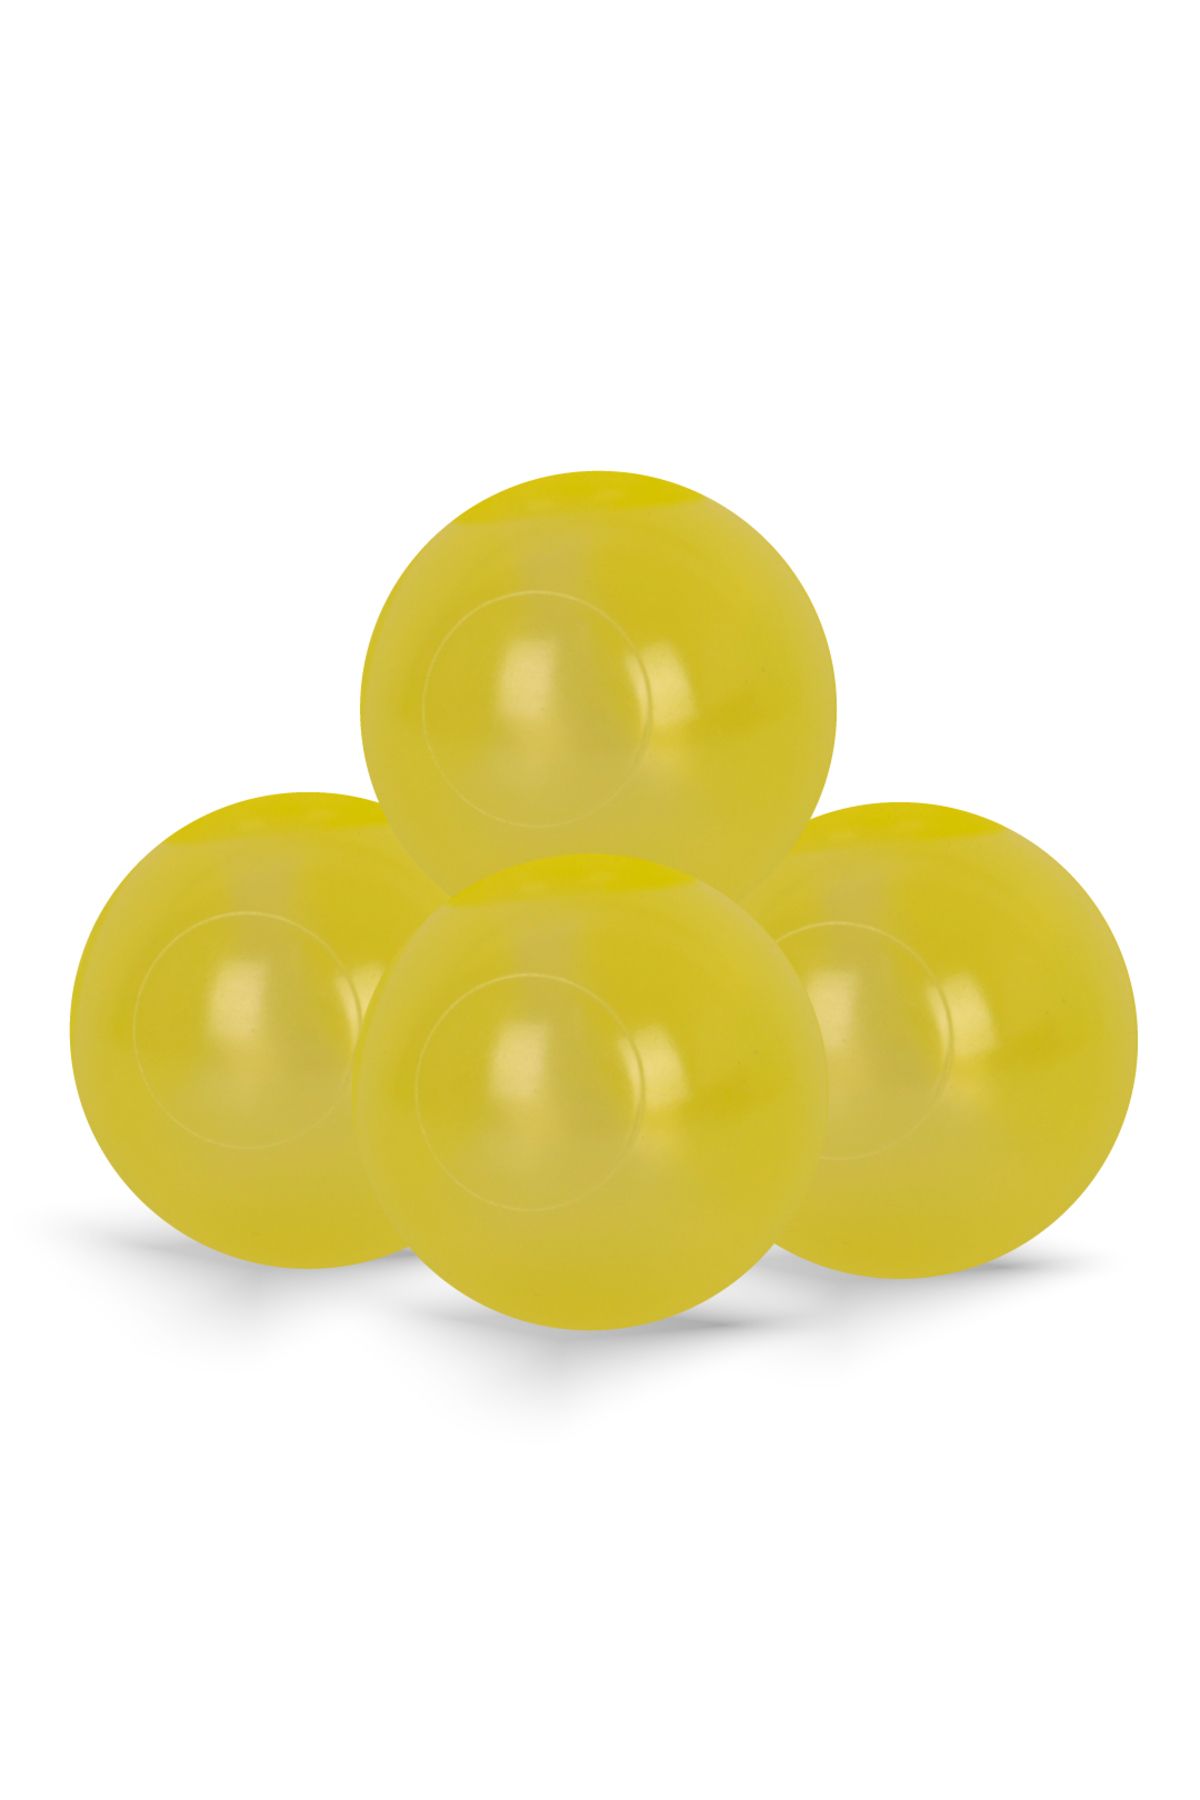 Afacanpark Sarı 7 Cm 500 Adet - Oyun Topu - Havuz Topu - Çocuk Oyun Su Topu